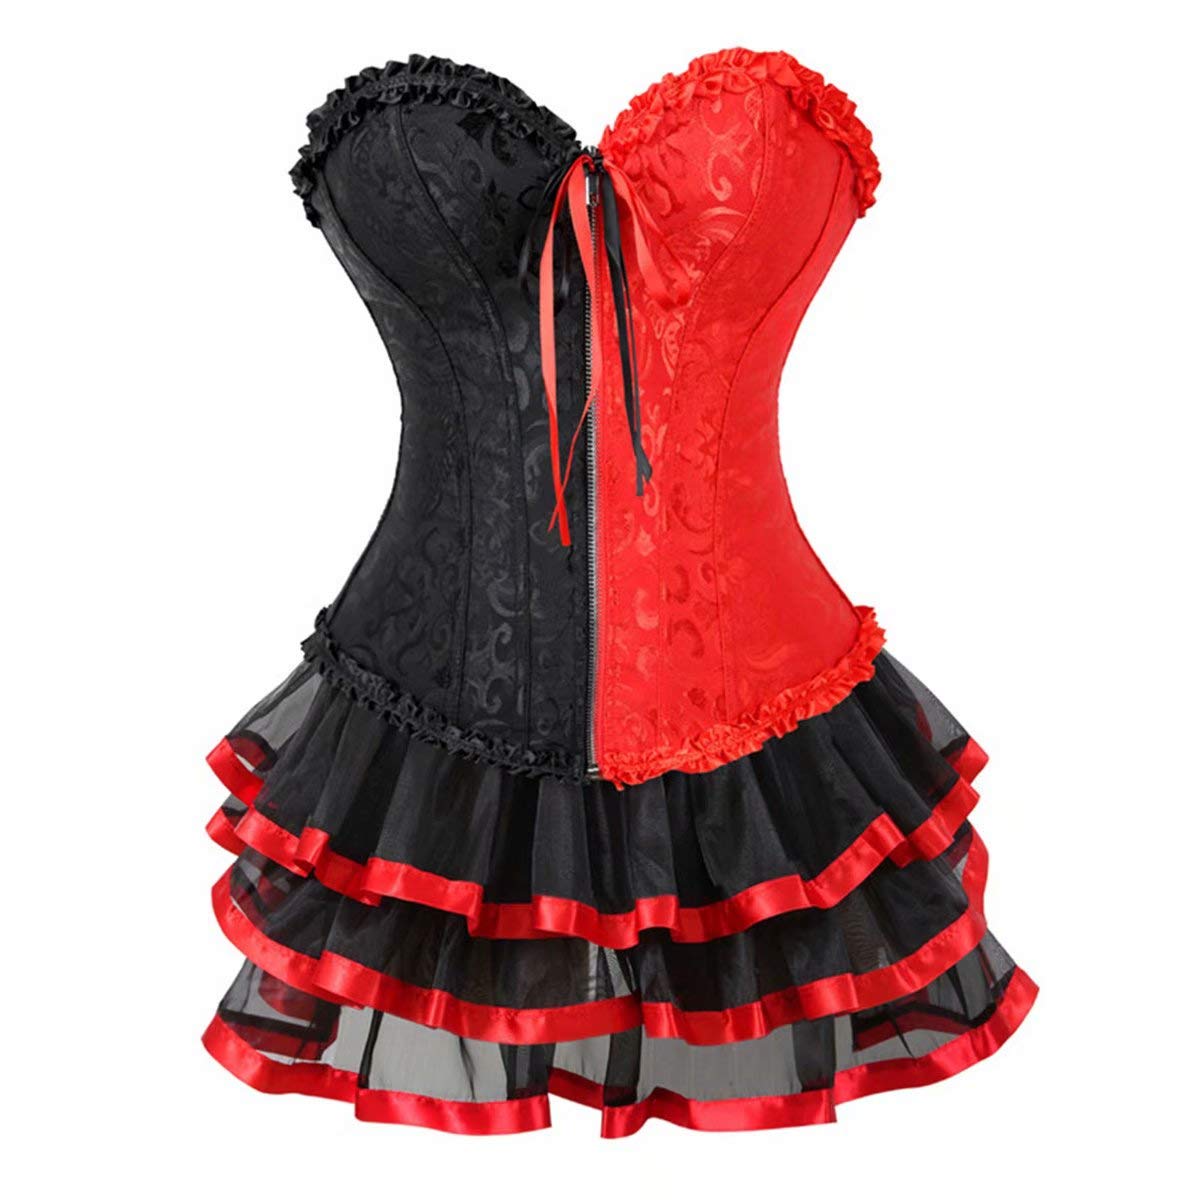 Josamogre Corsagenkleid Gothic vollbrust korsett Kleid tutu elegant rock set Damen reissverschluss burlesque vintageSchwarz rot 3XL